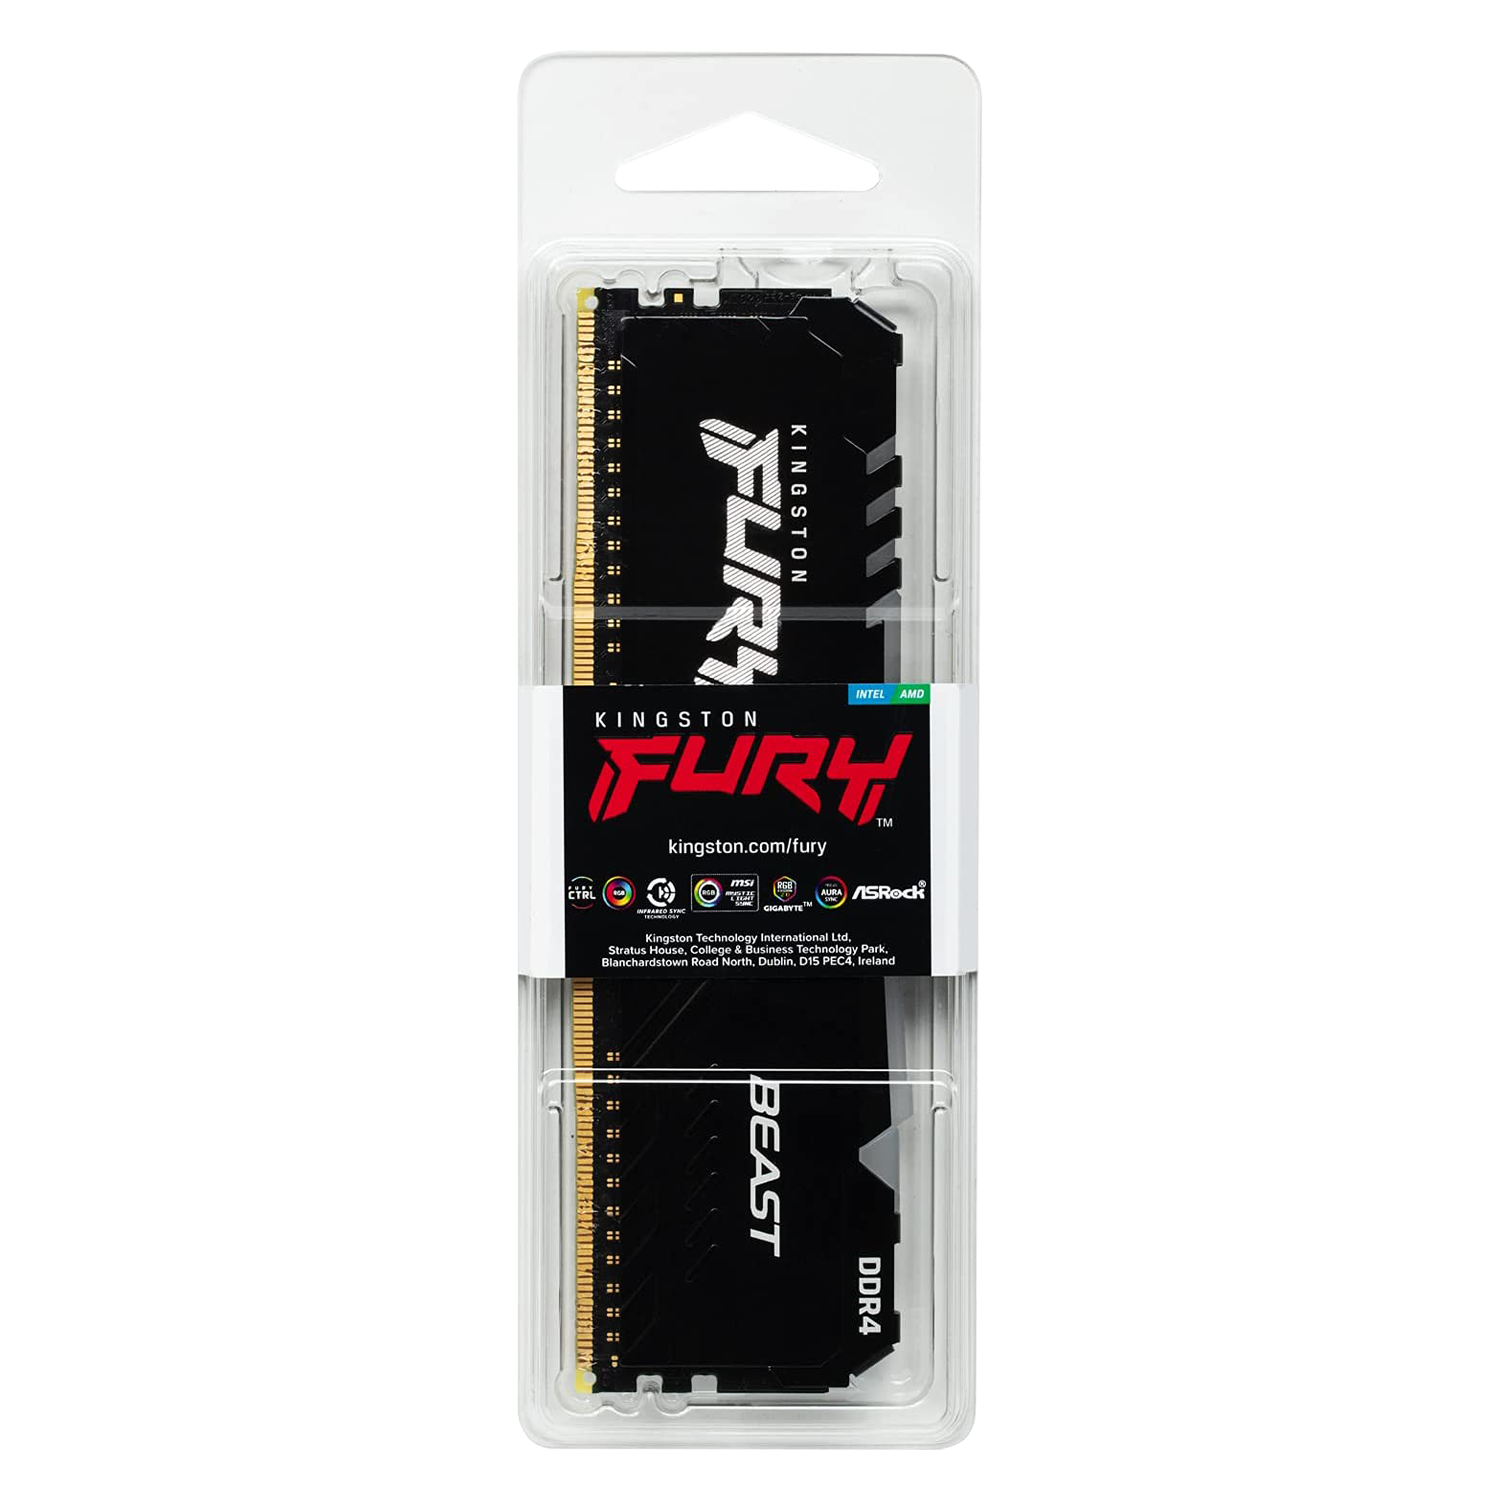 Memória RAM Kingston Beast Fury 8GB / DDR4 / 2666MHz - Preto (KF426C16BBA/8)